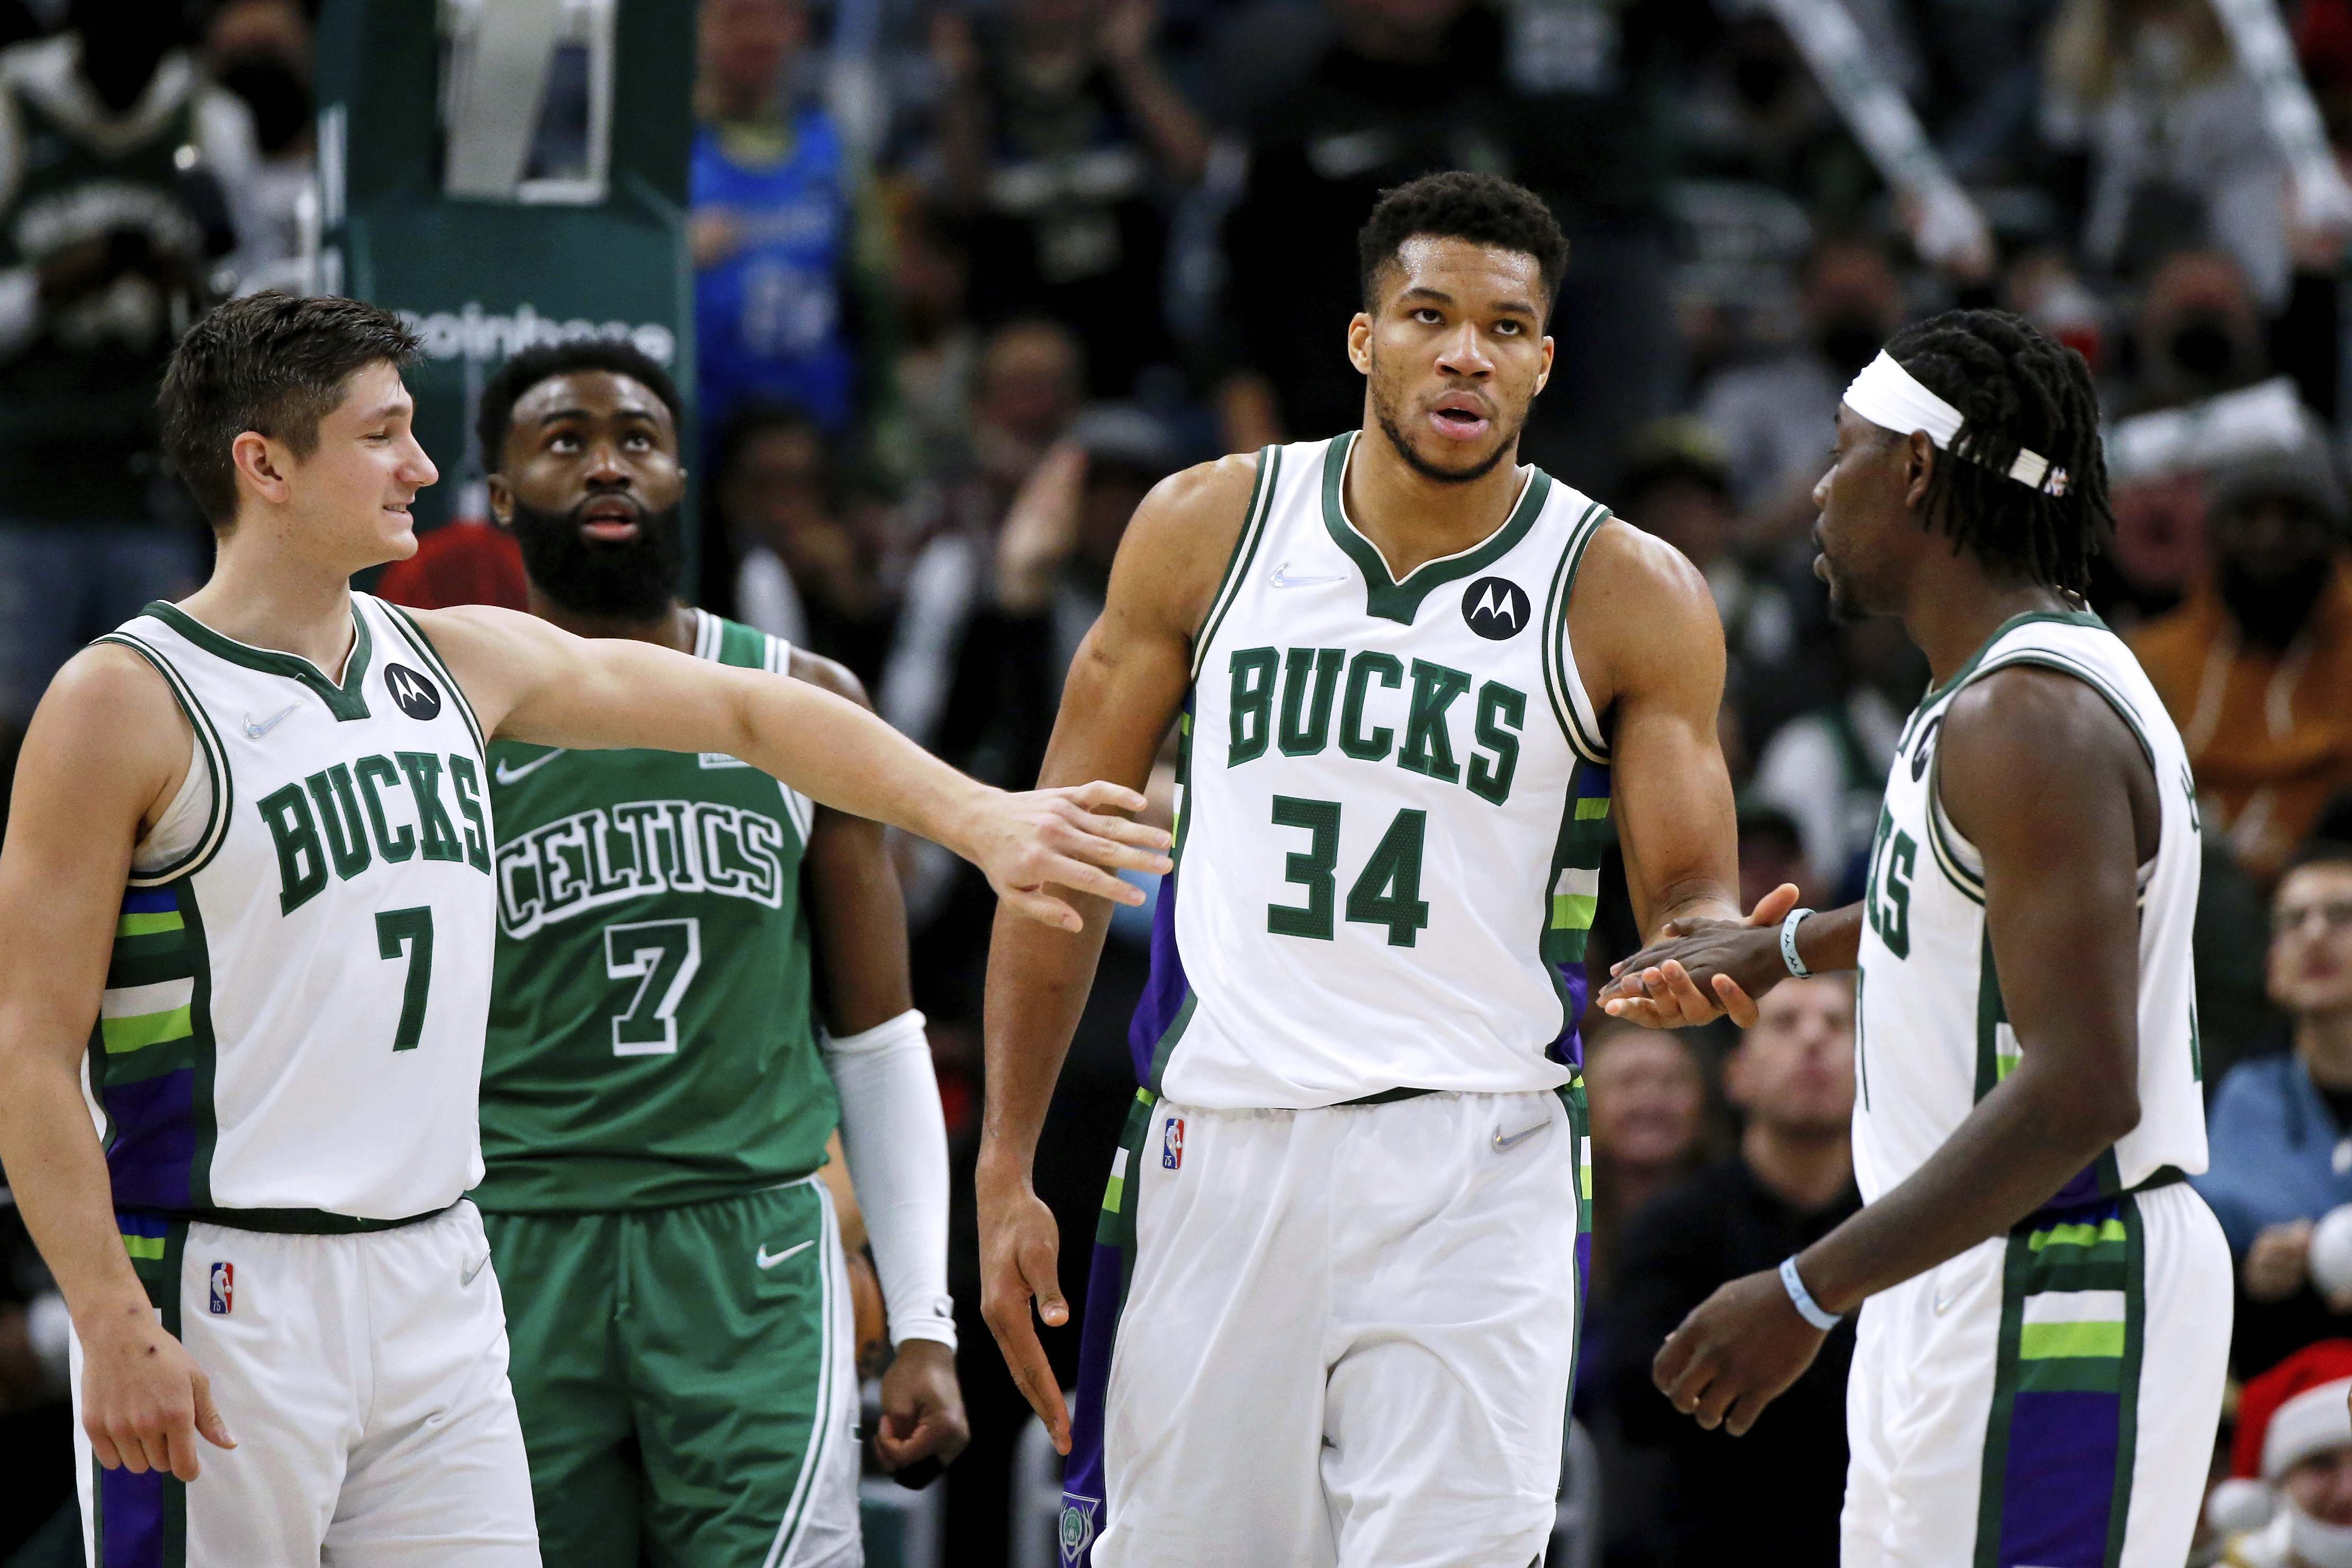 Bucks-Celtics Game 1 live stream (5/1) How to watch online, TV, time